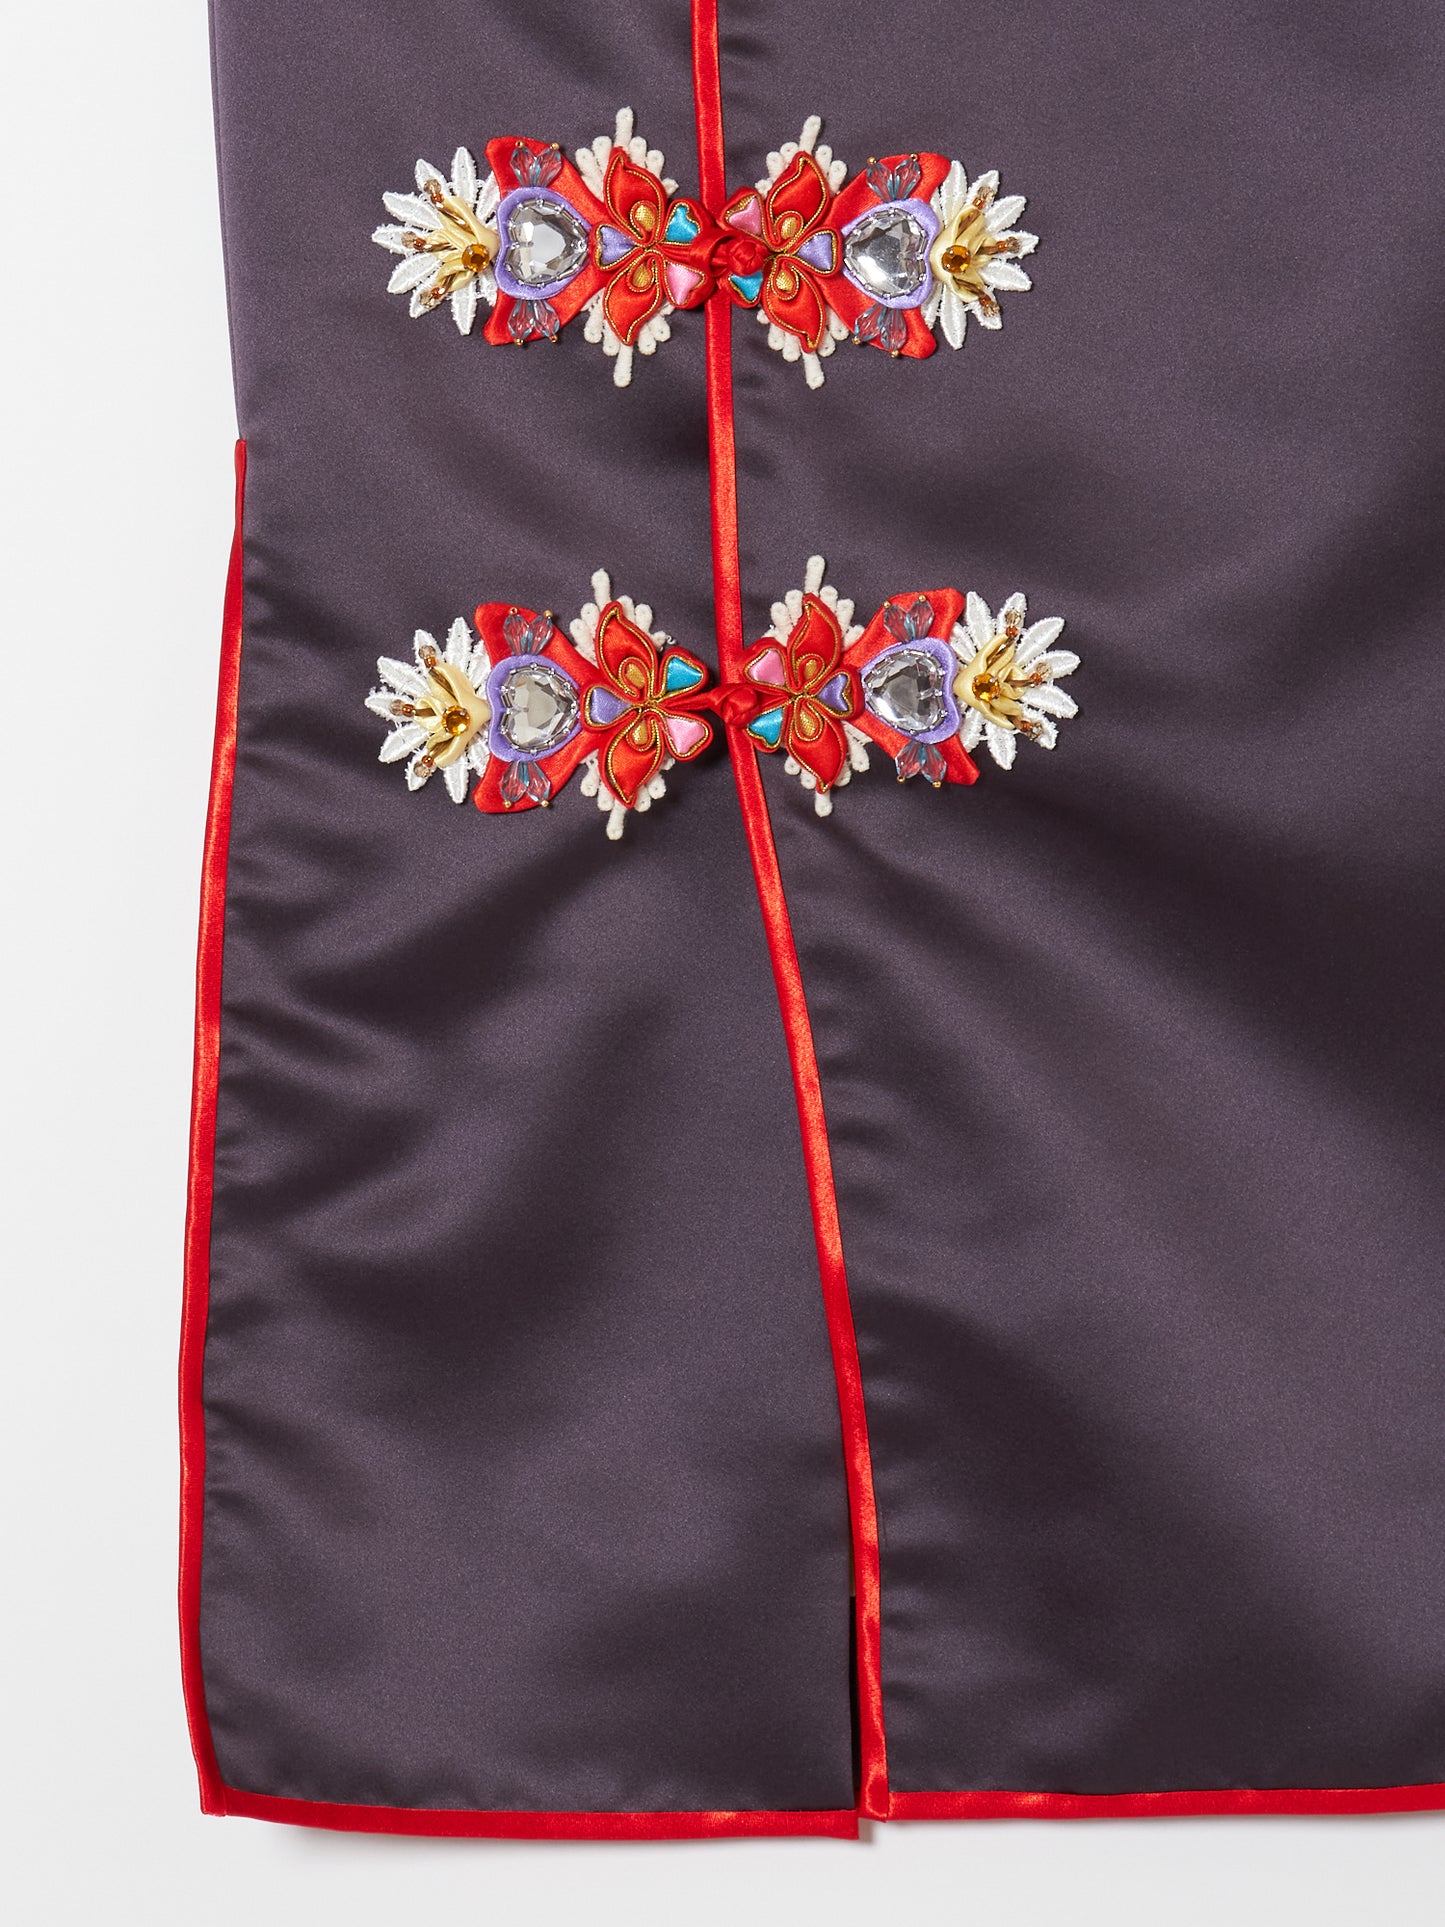 Magical china button skirt